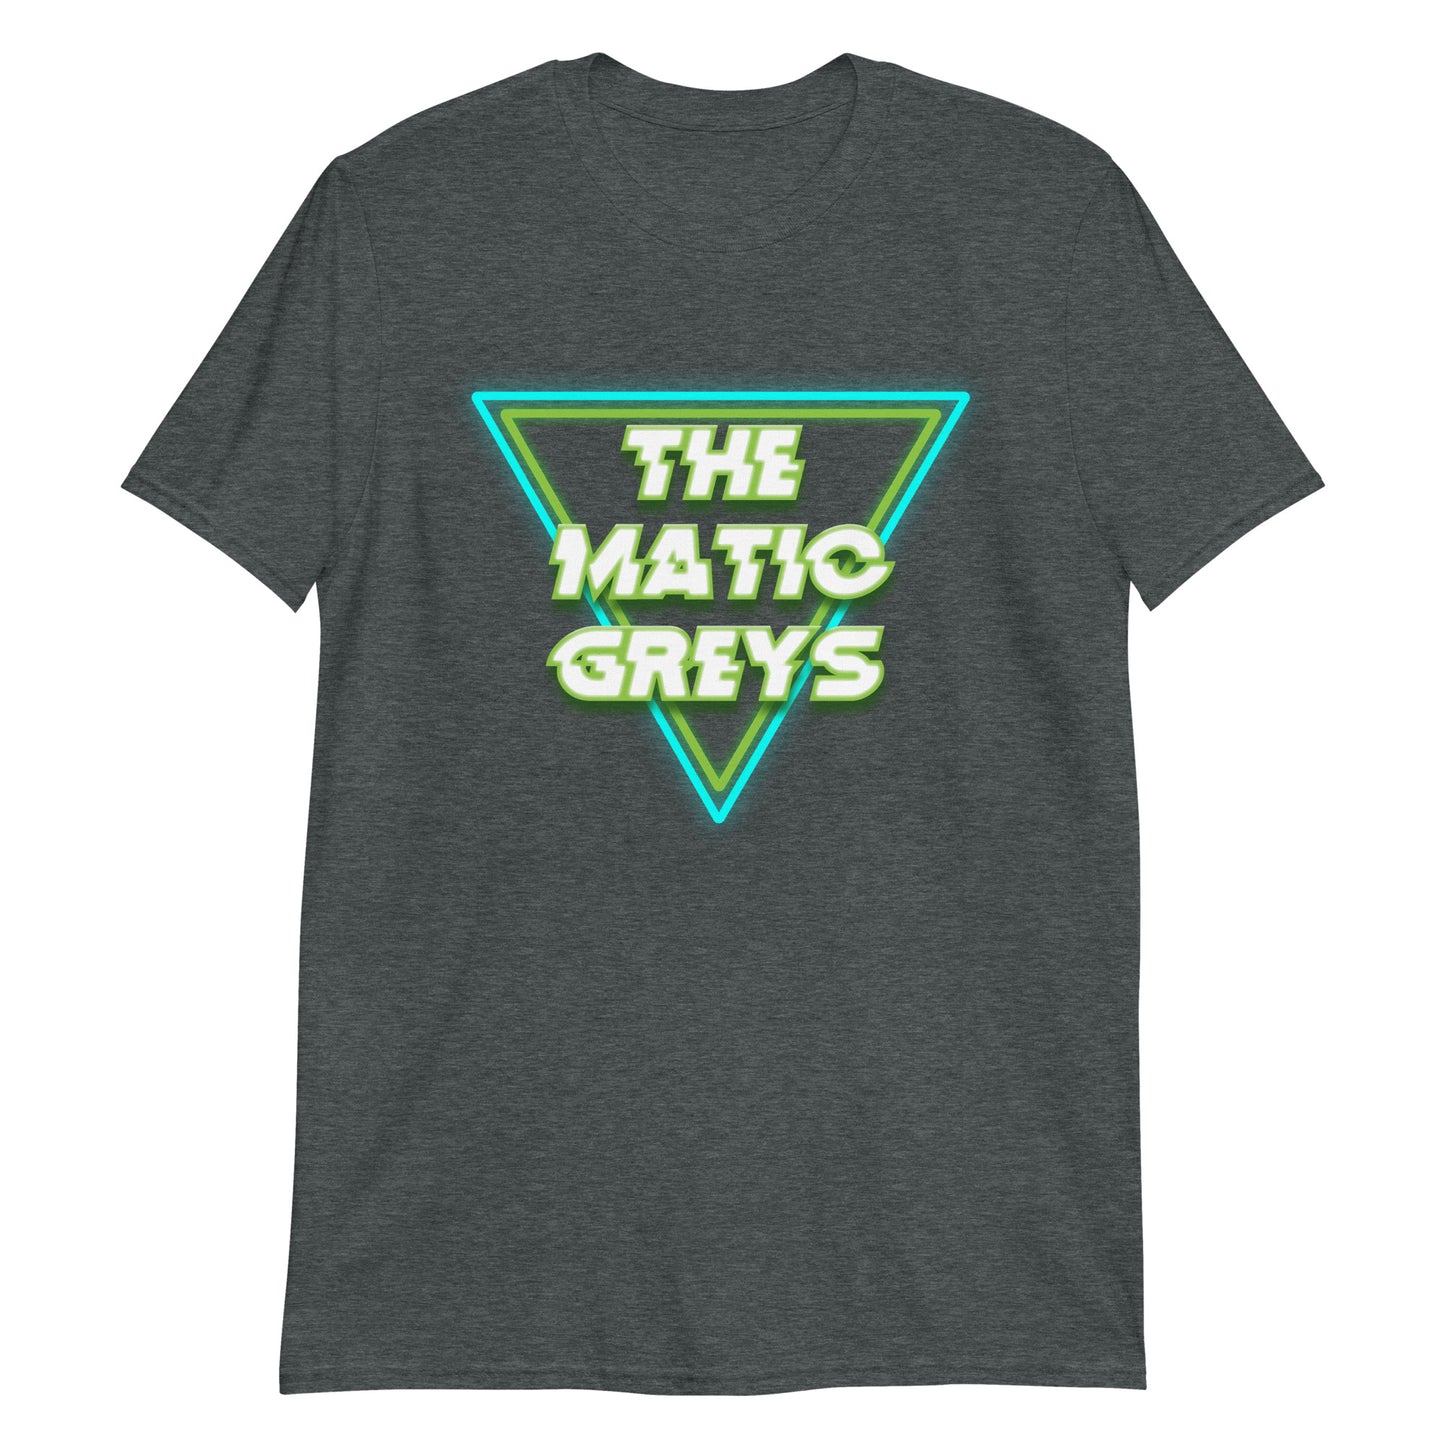 TheMaticGreys 80s Style Short-Sleeve Unisex T-Shirt